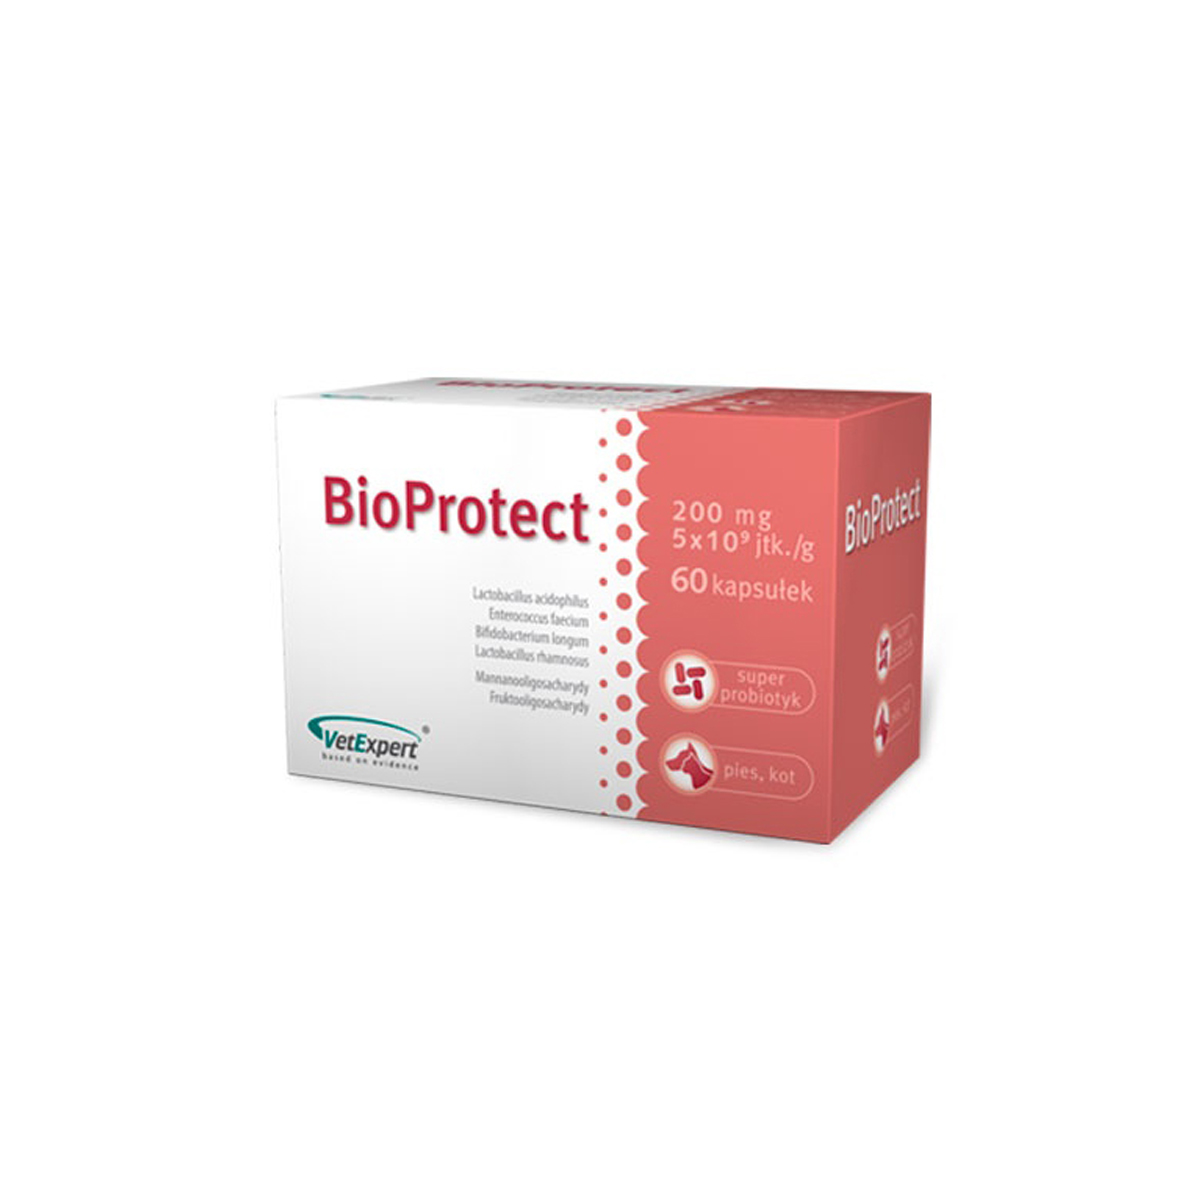 Bioprotect 60 capsule thepetclub